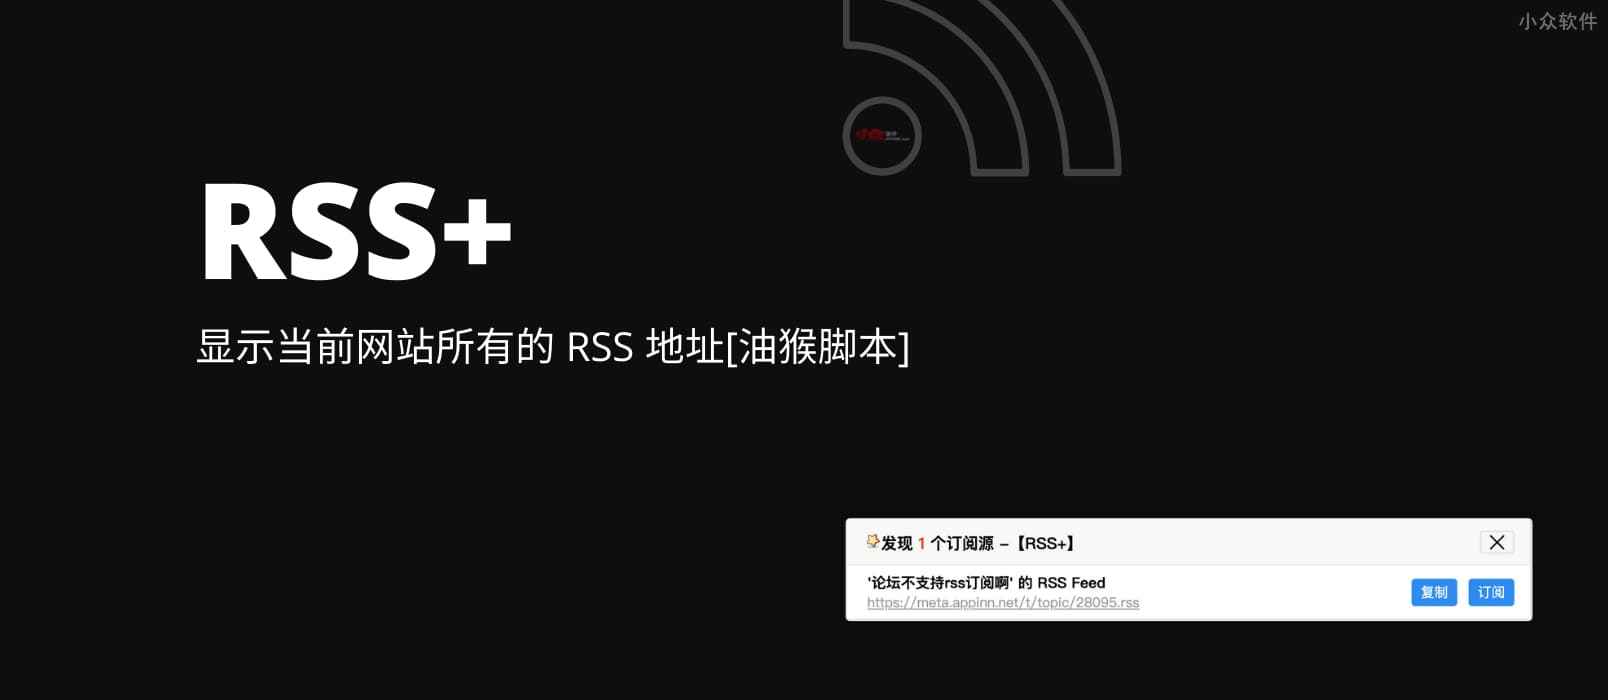 RSS+ & RSSHelper – 显示当前网站的 RSS  地址[2个油猴脚本]